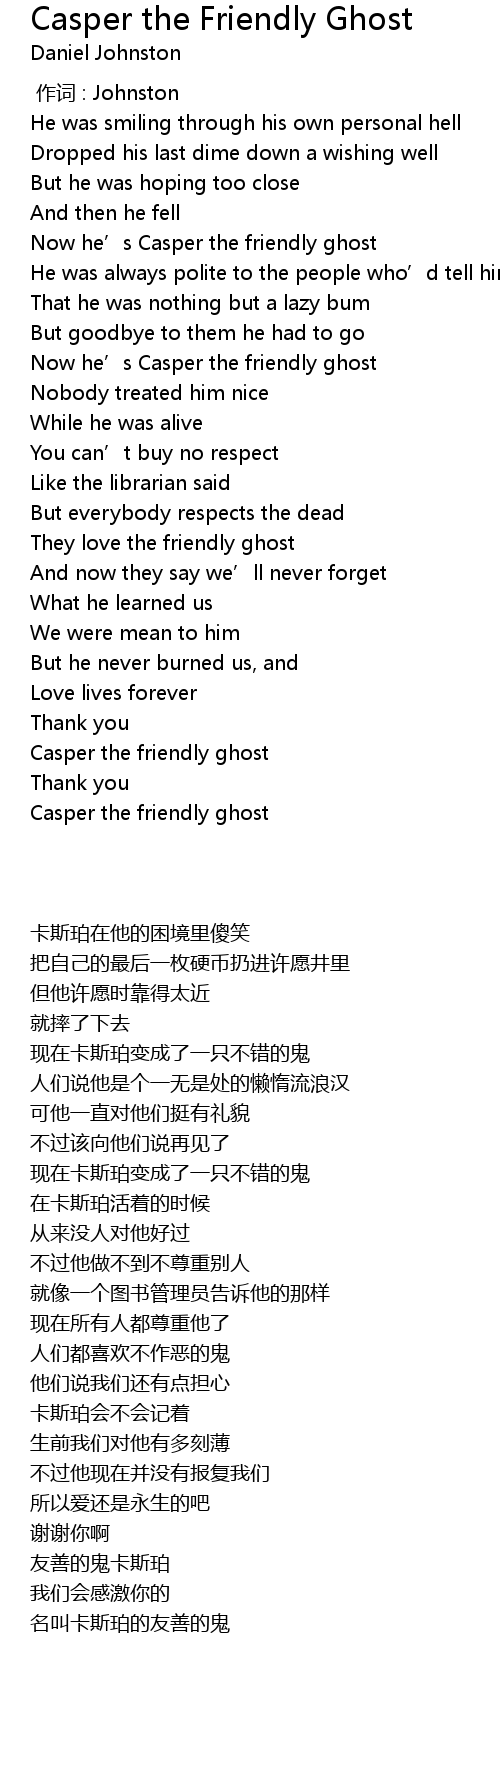 Ghost lyrics